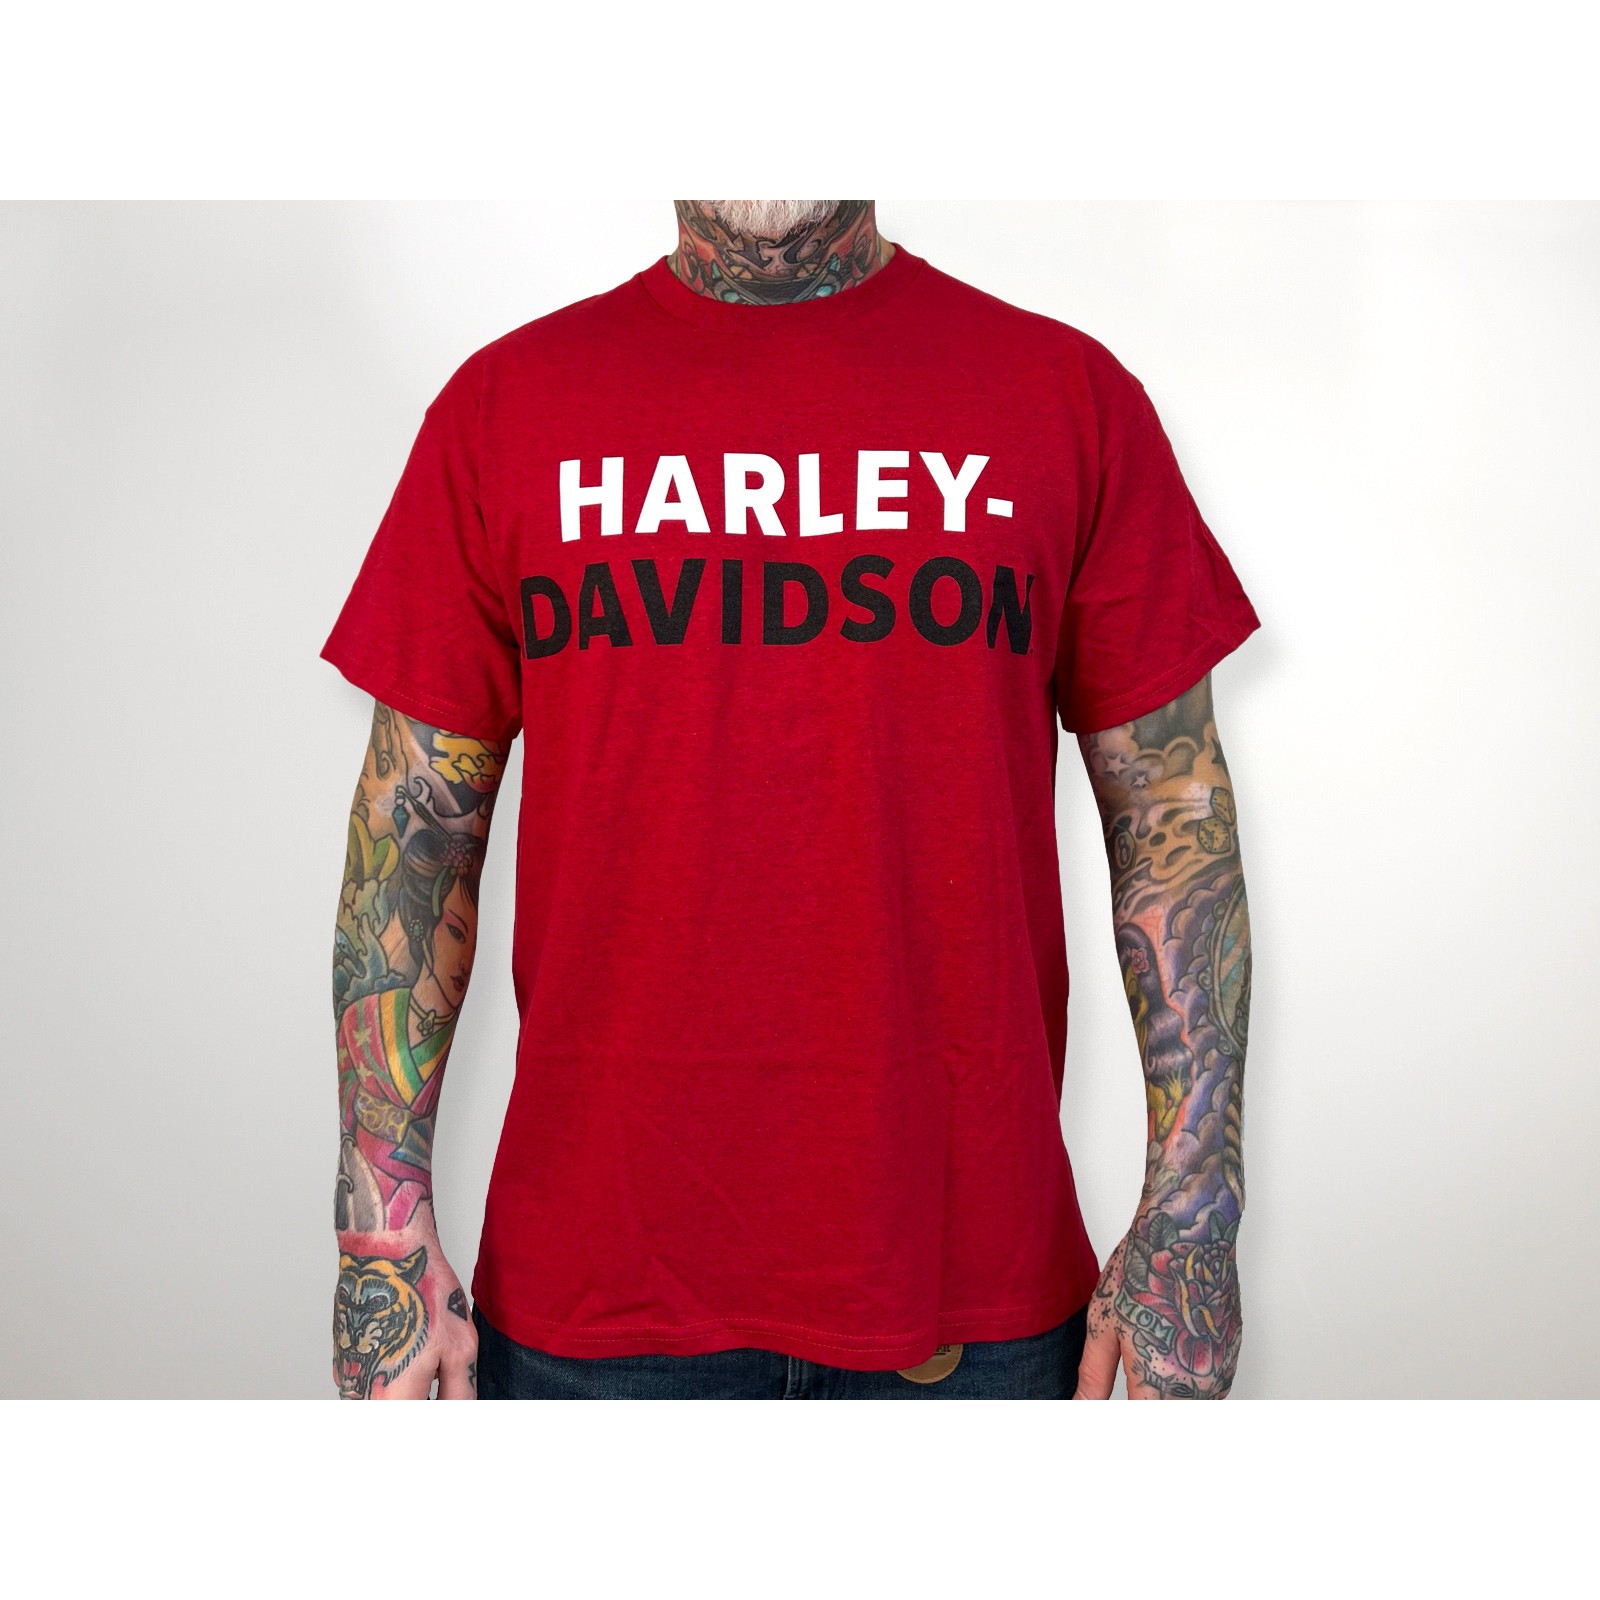 von Davidson! & Harley T-Shirts Company Rokker The